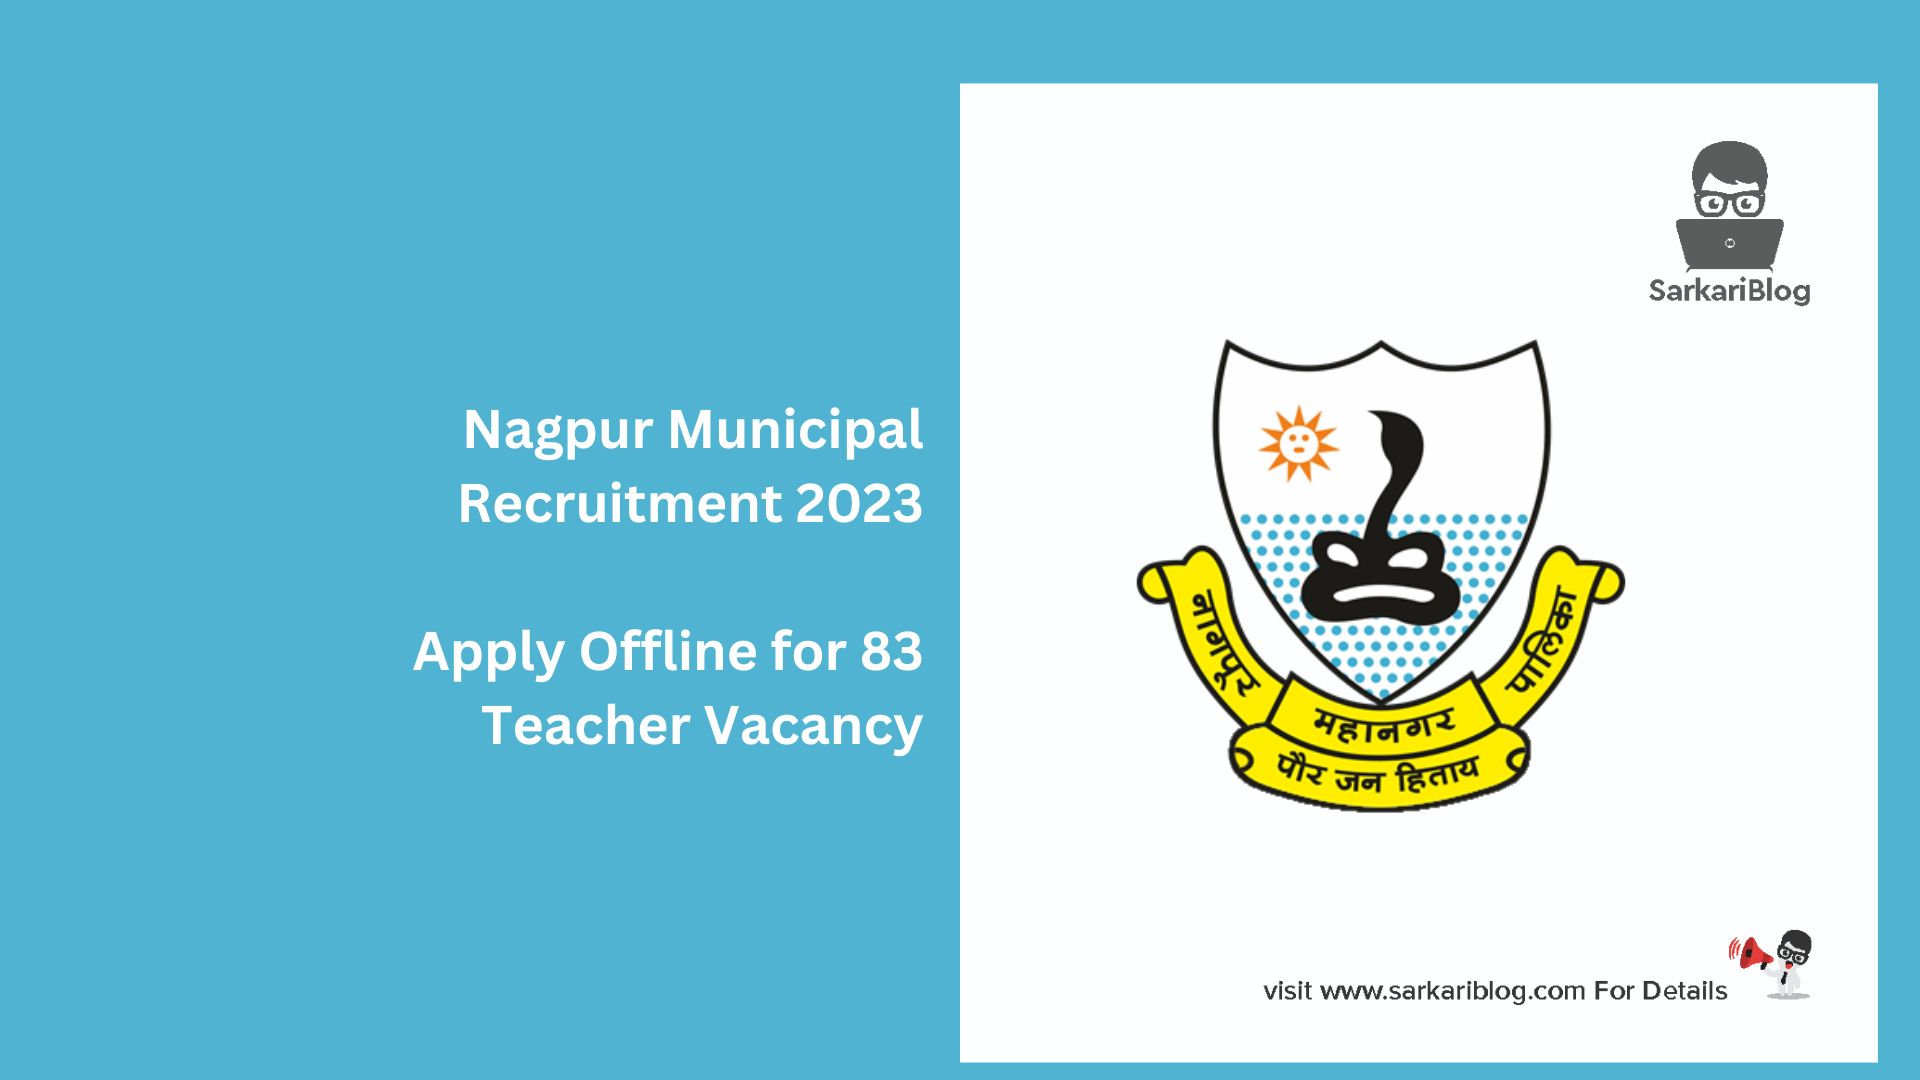 Nagpur Municipal Recruitment 2023